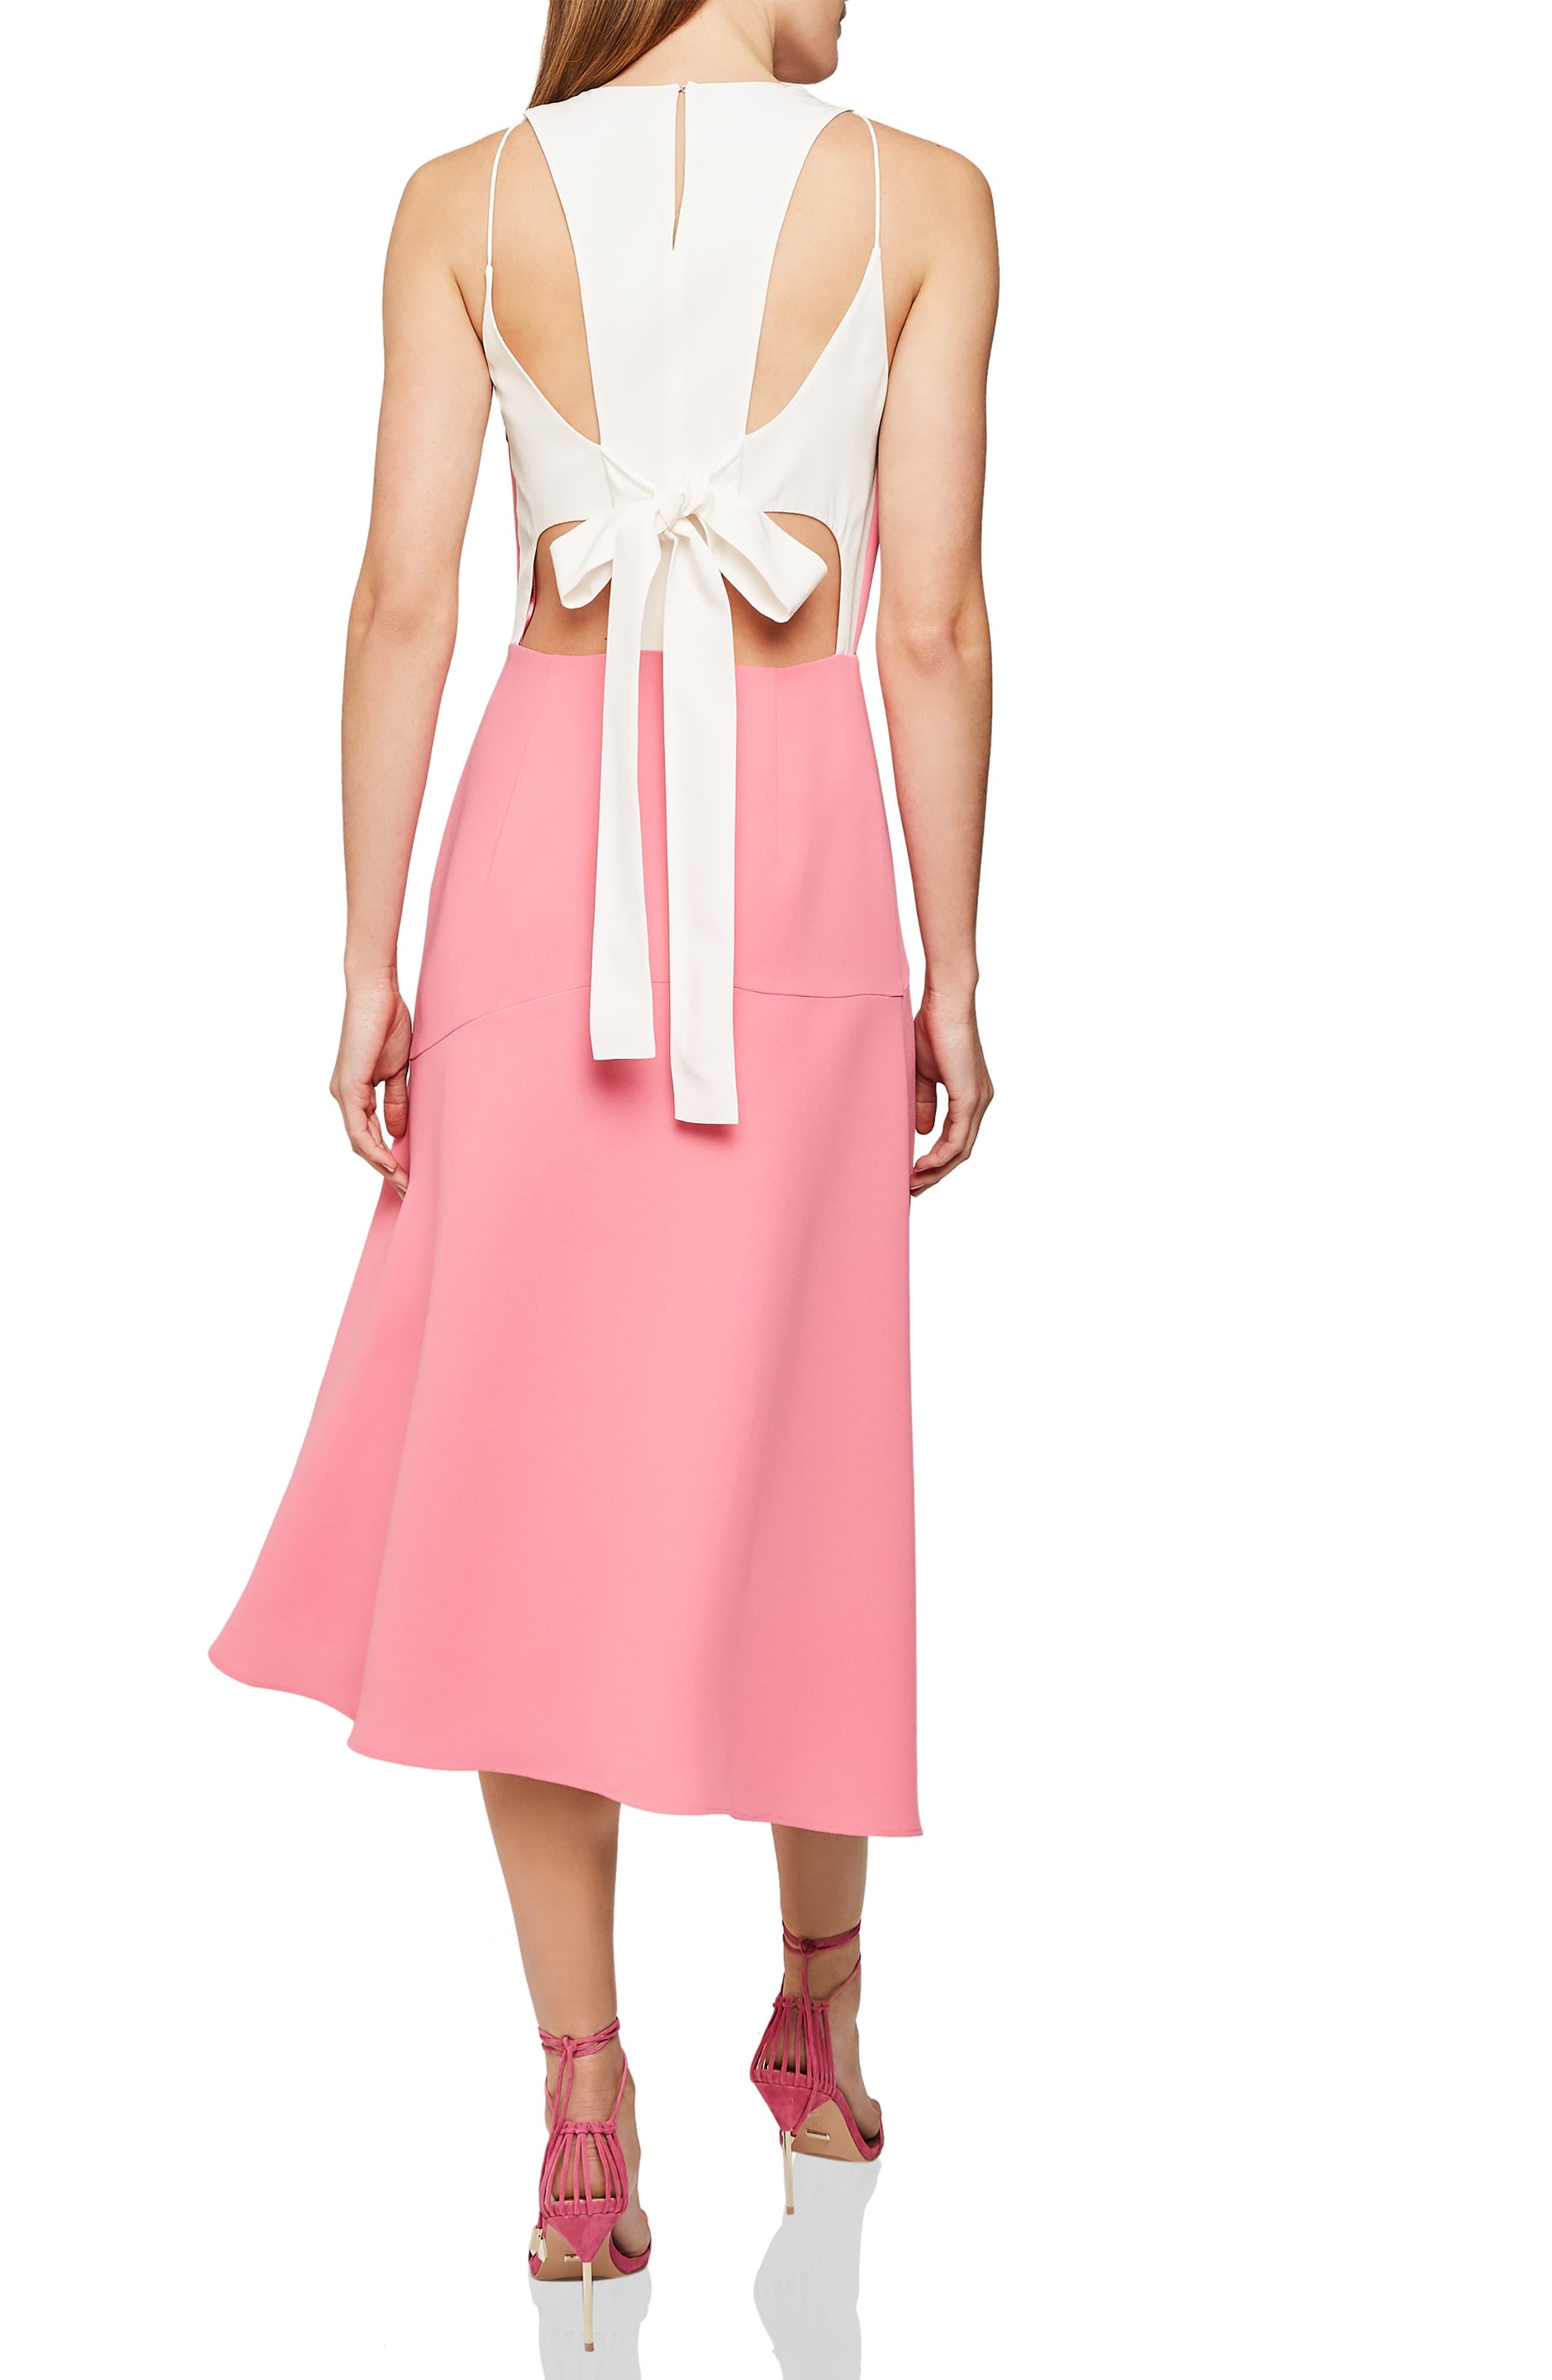 Reiss Synthetic Cheyenne Back - Cutout Midi Dress in Pink - Lyst